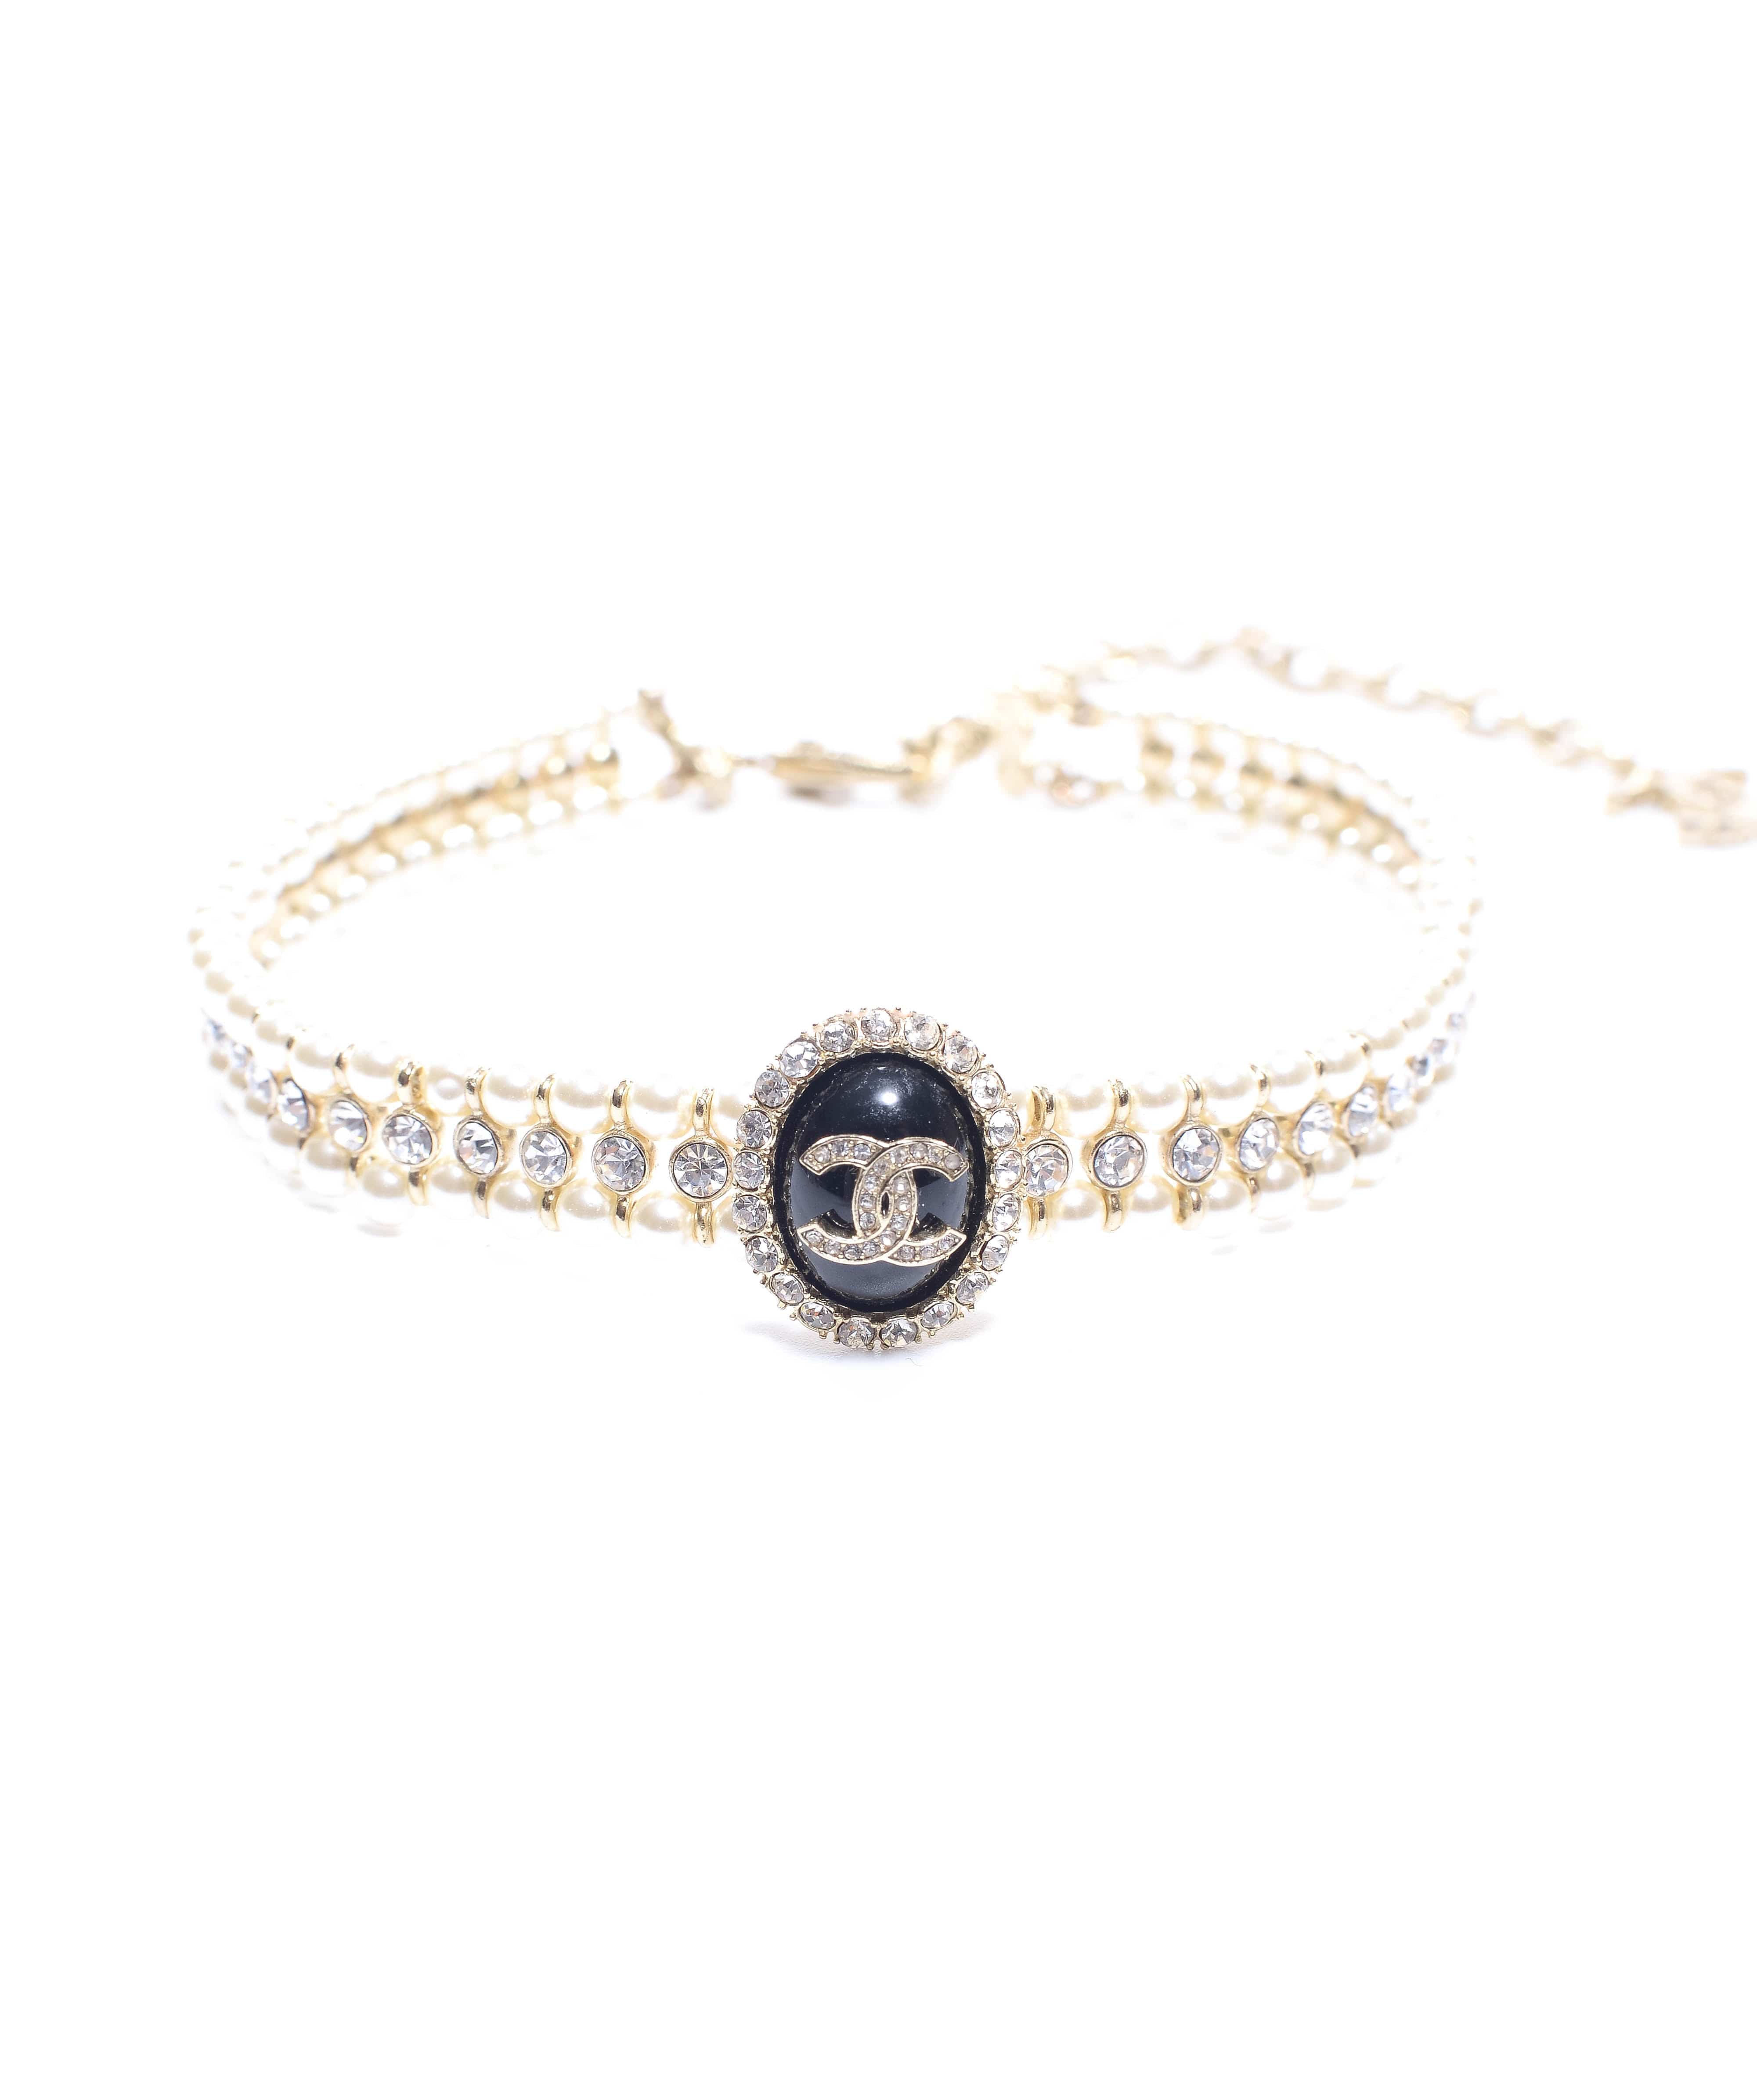 Chanel Chanel Choker Necklace Oval Pendant Strass LGHW SKC1152